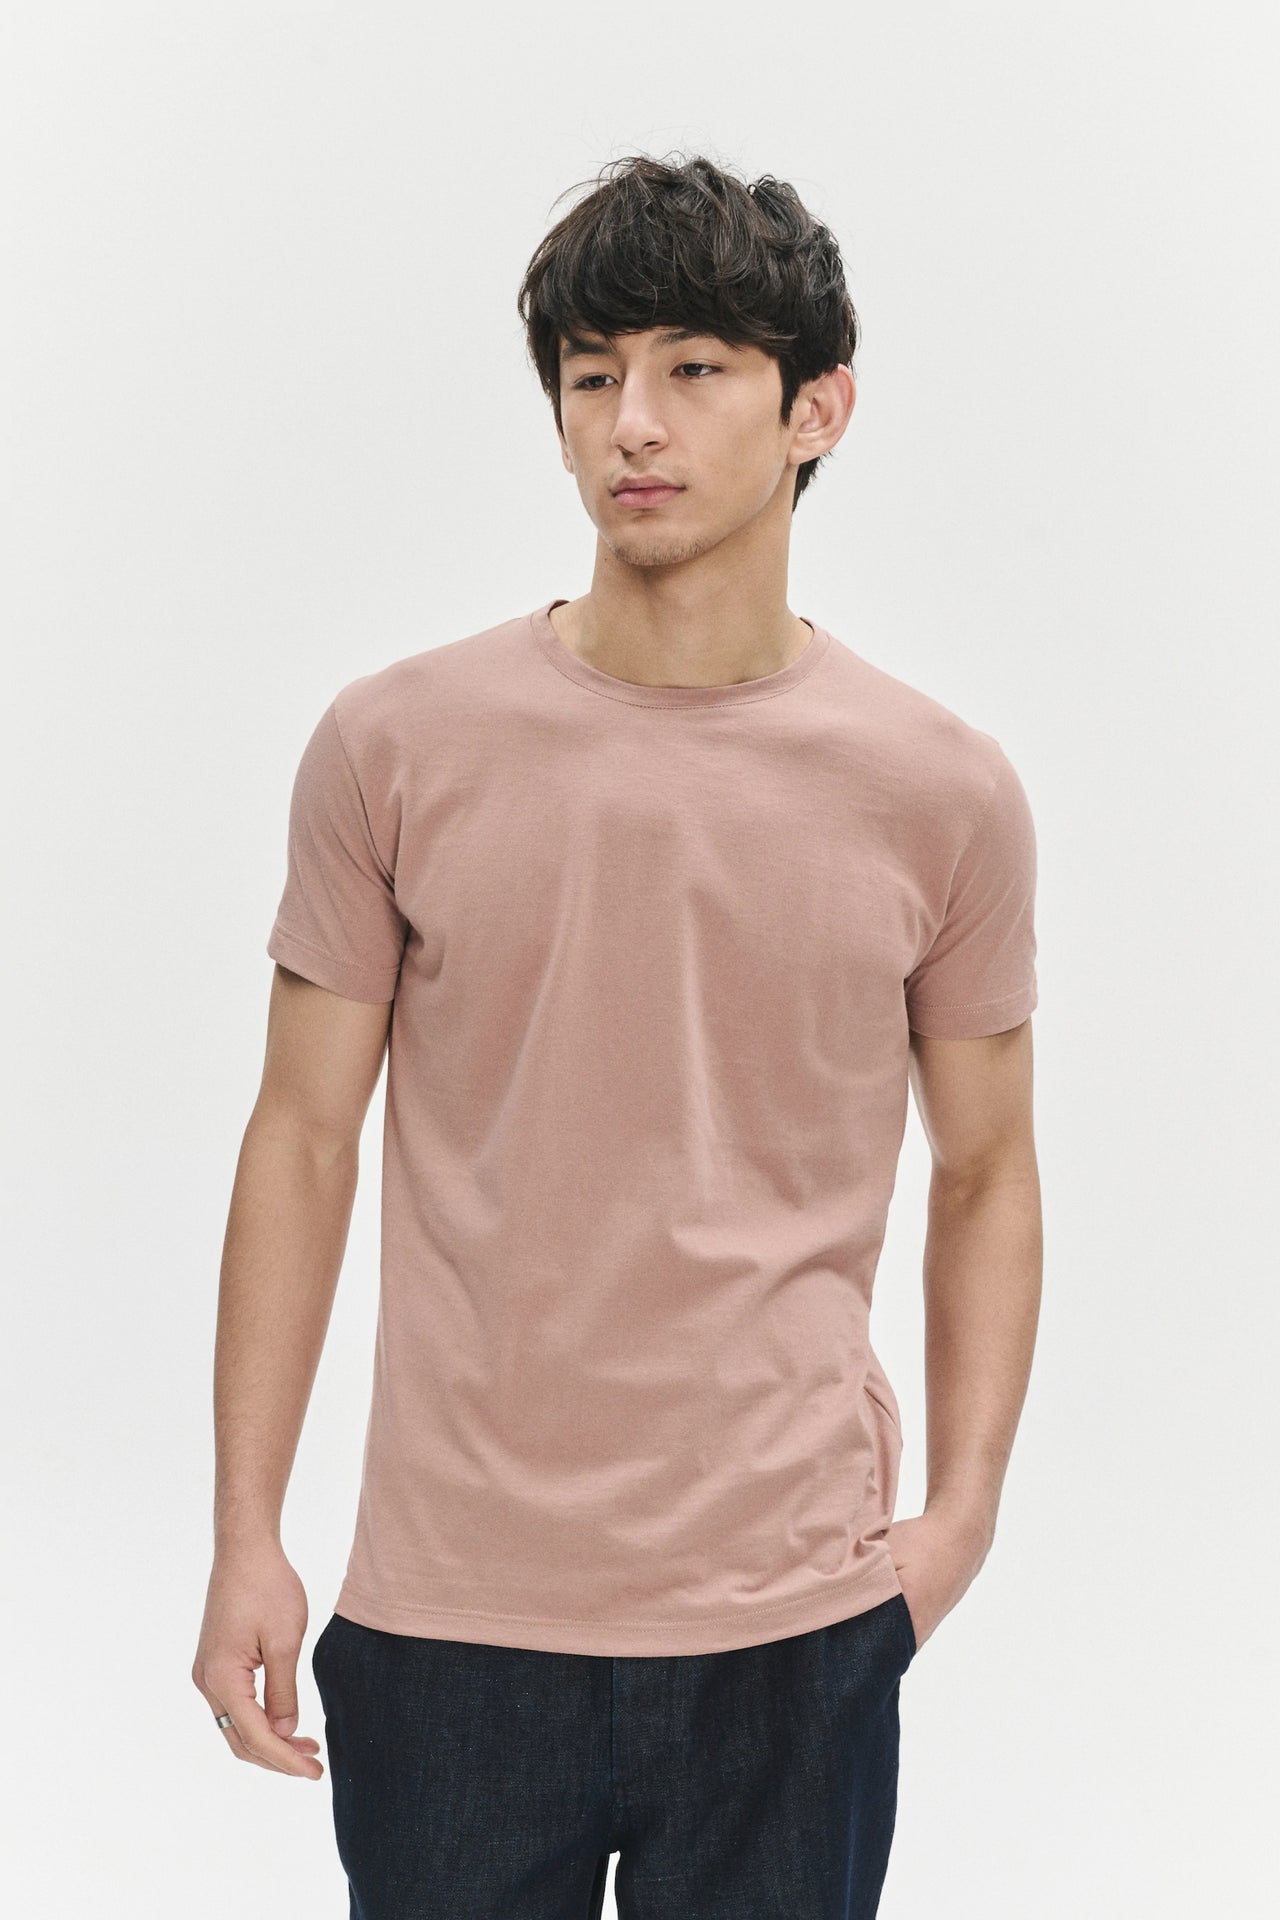 Pocket T-Shirt in a Powder Pink Soft Organic Japanese Cotton